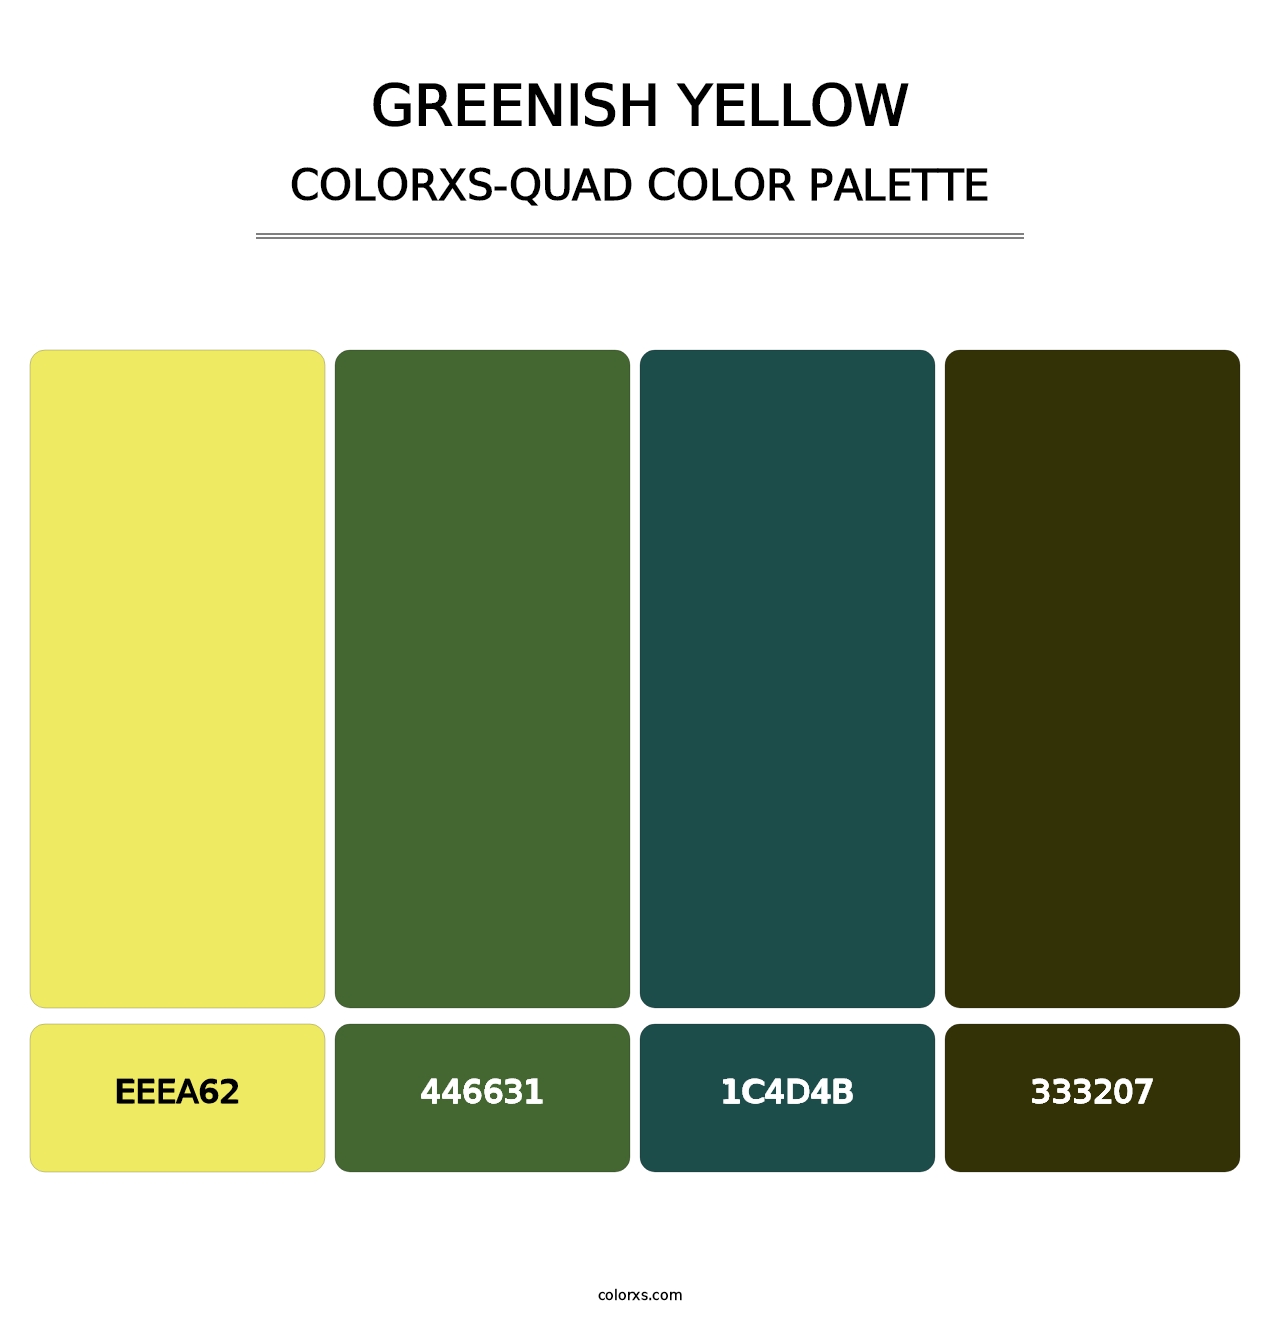 Greenish Yellow - Colorxs Quad Palette